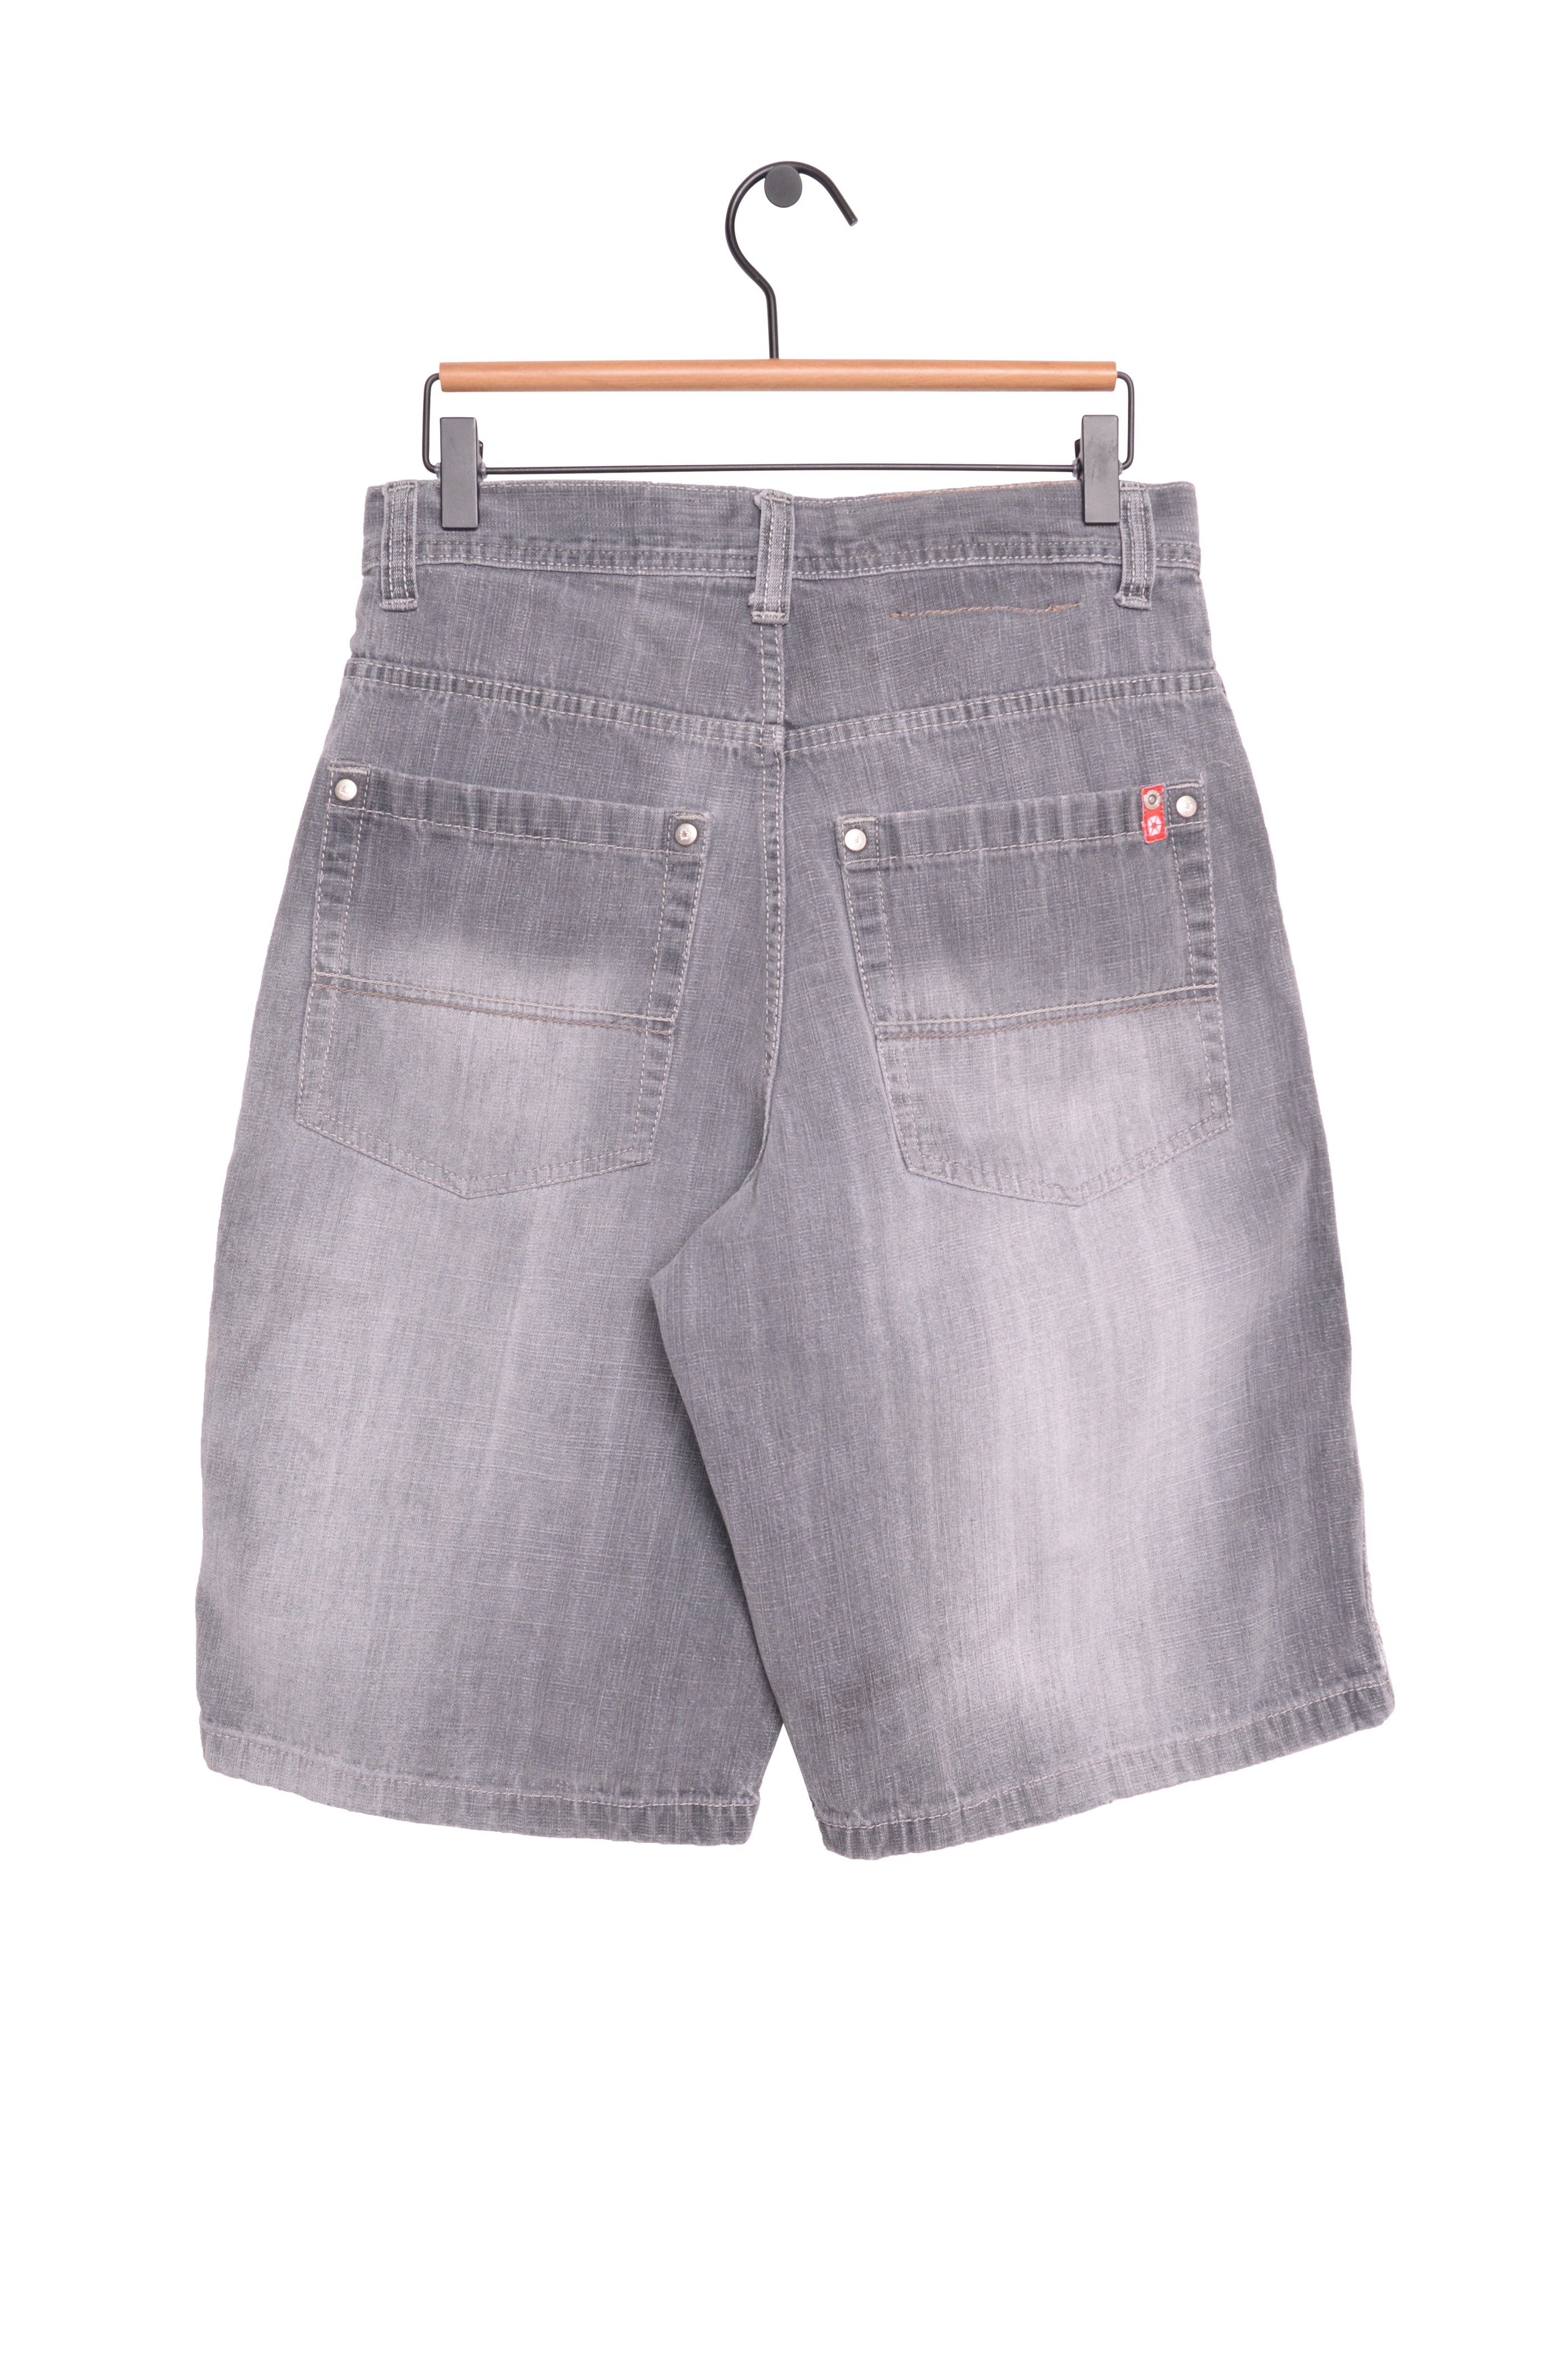 Men's Southpole Embroidered Pockets Baggy Denim Shorts Size 38 | eBay